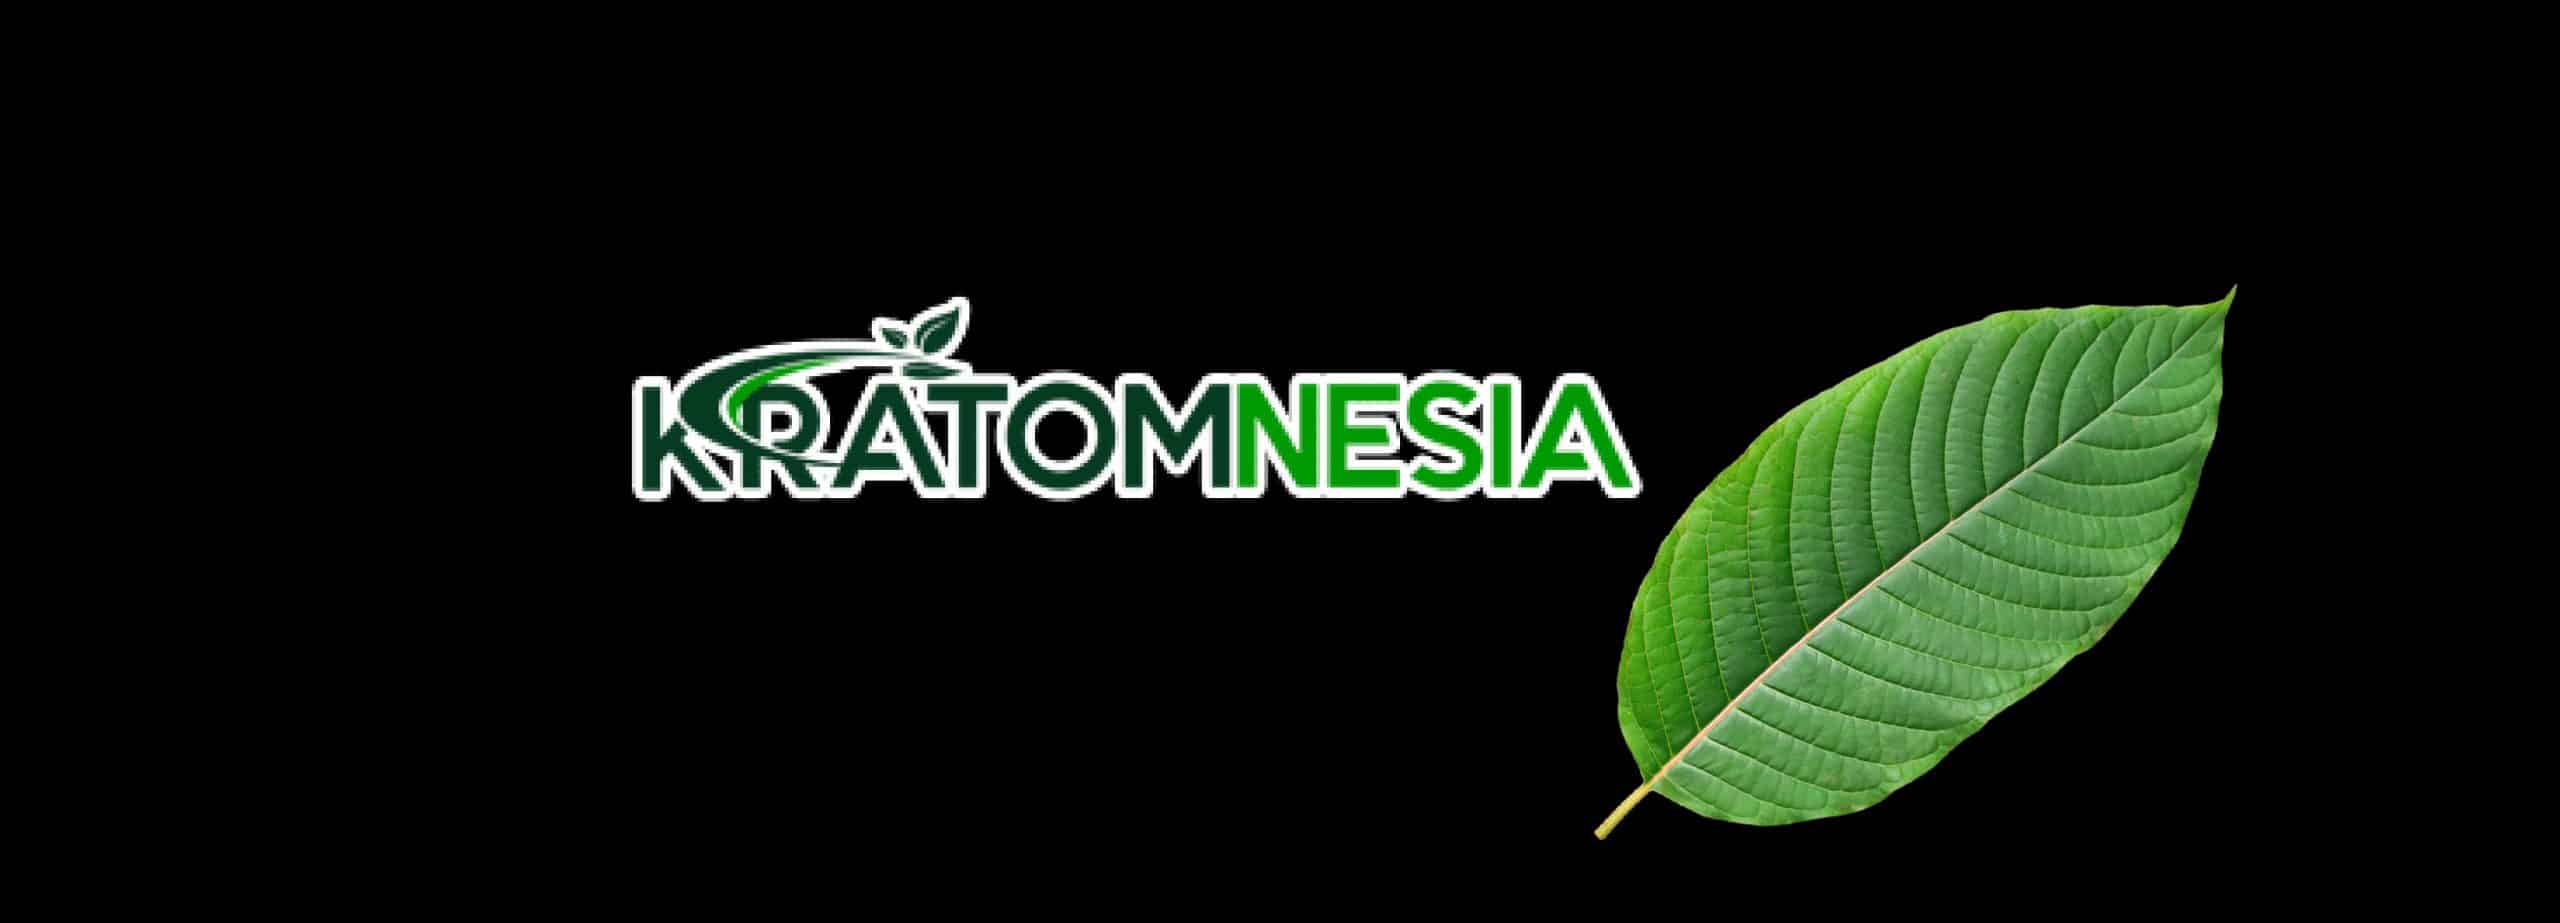 image of kratomnesia logo